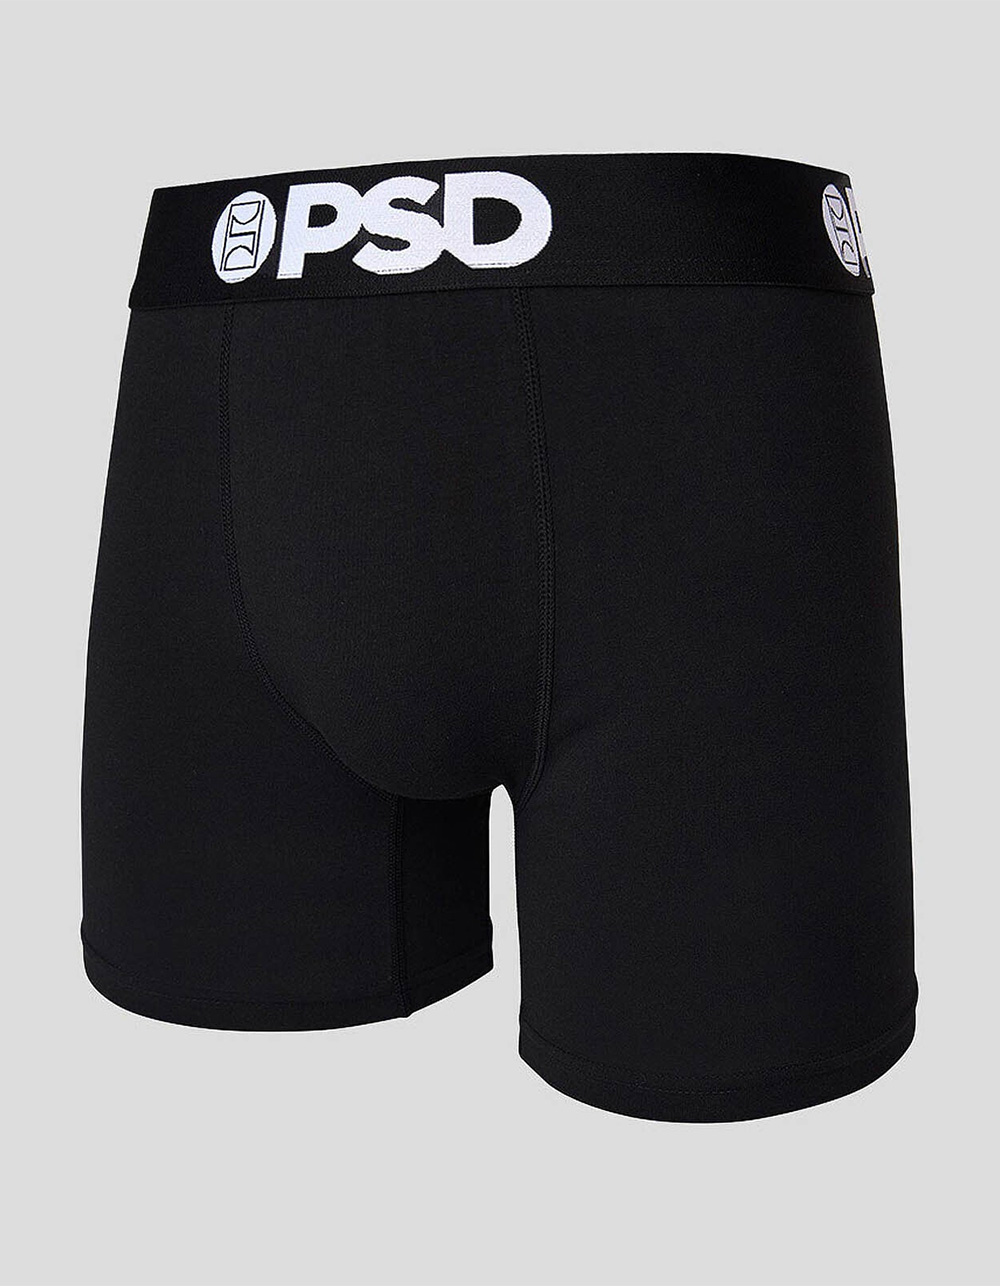 PSD Underwear Womens Lit 100 Sports Bra Multi X-Large